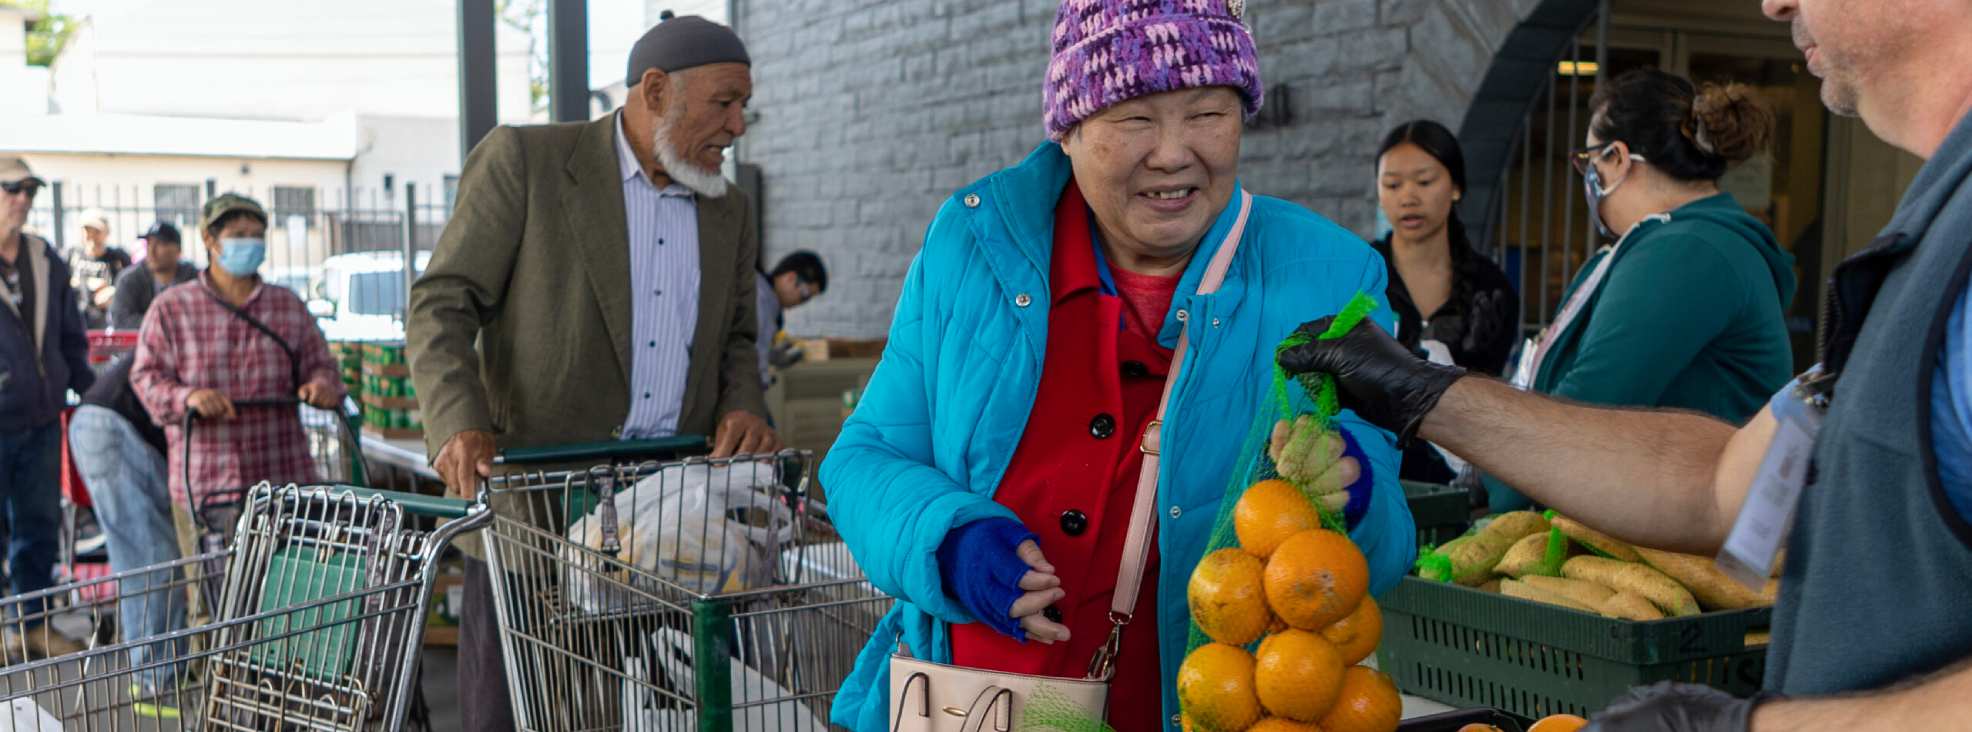 Photo of woman choosing a bag of produce.